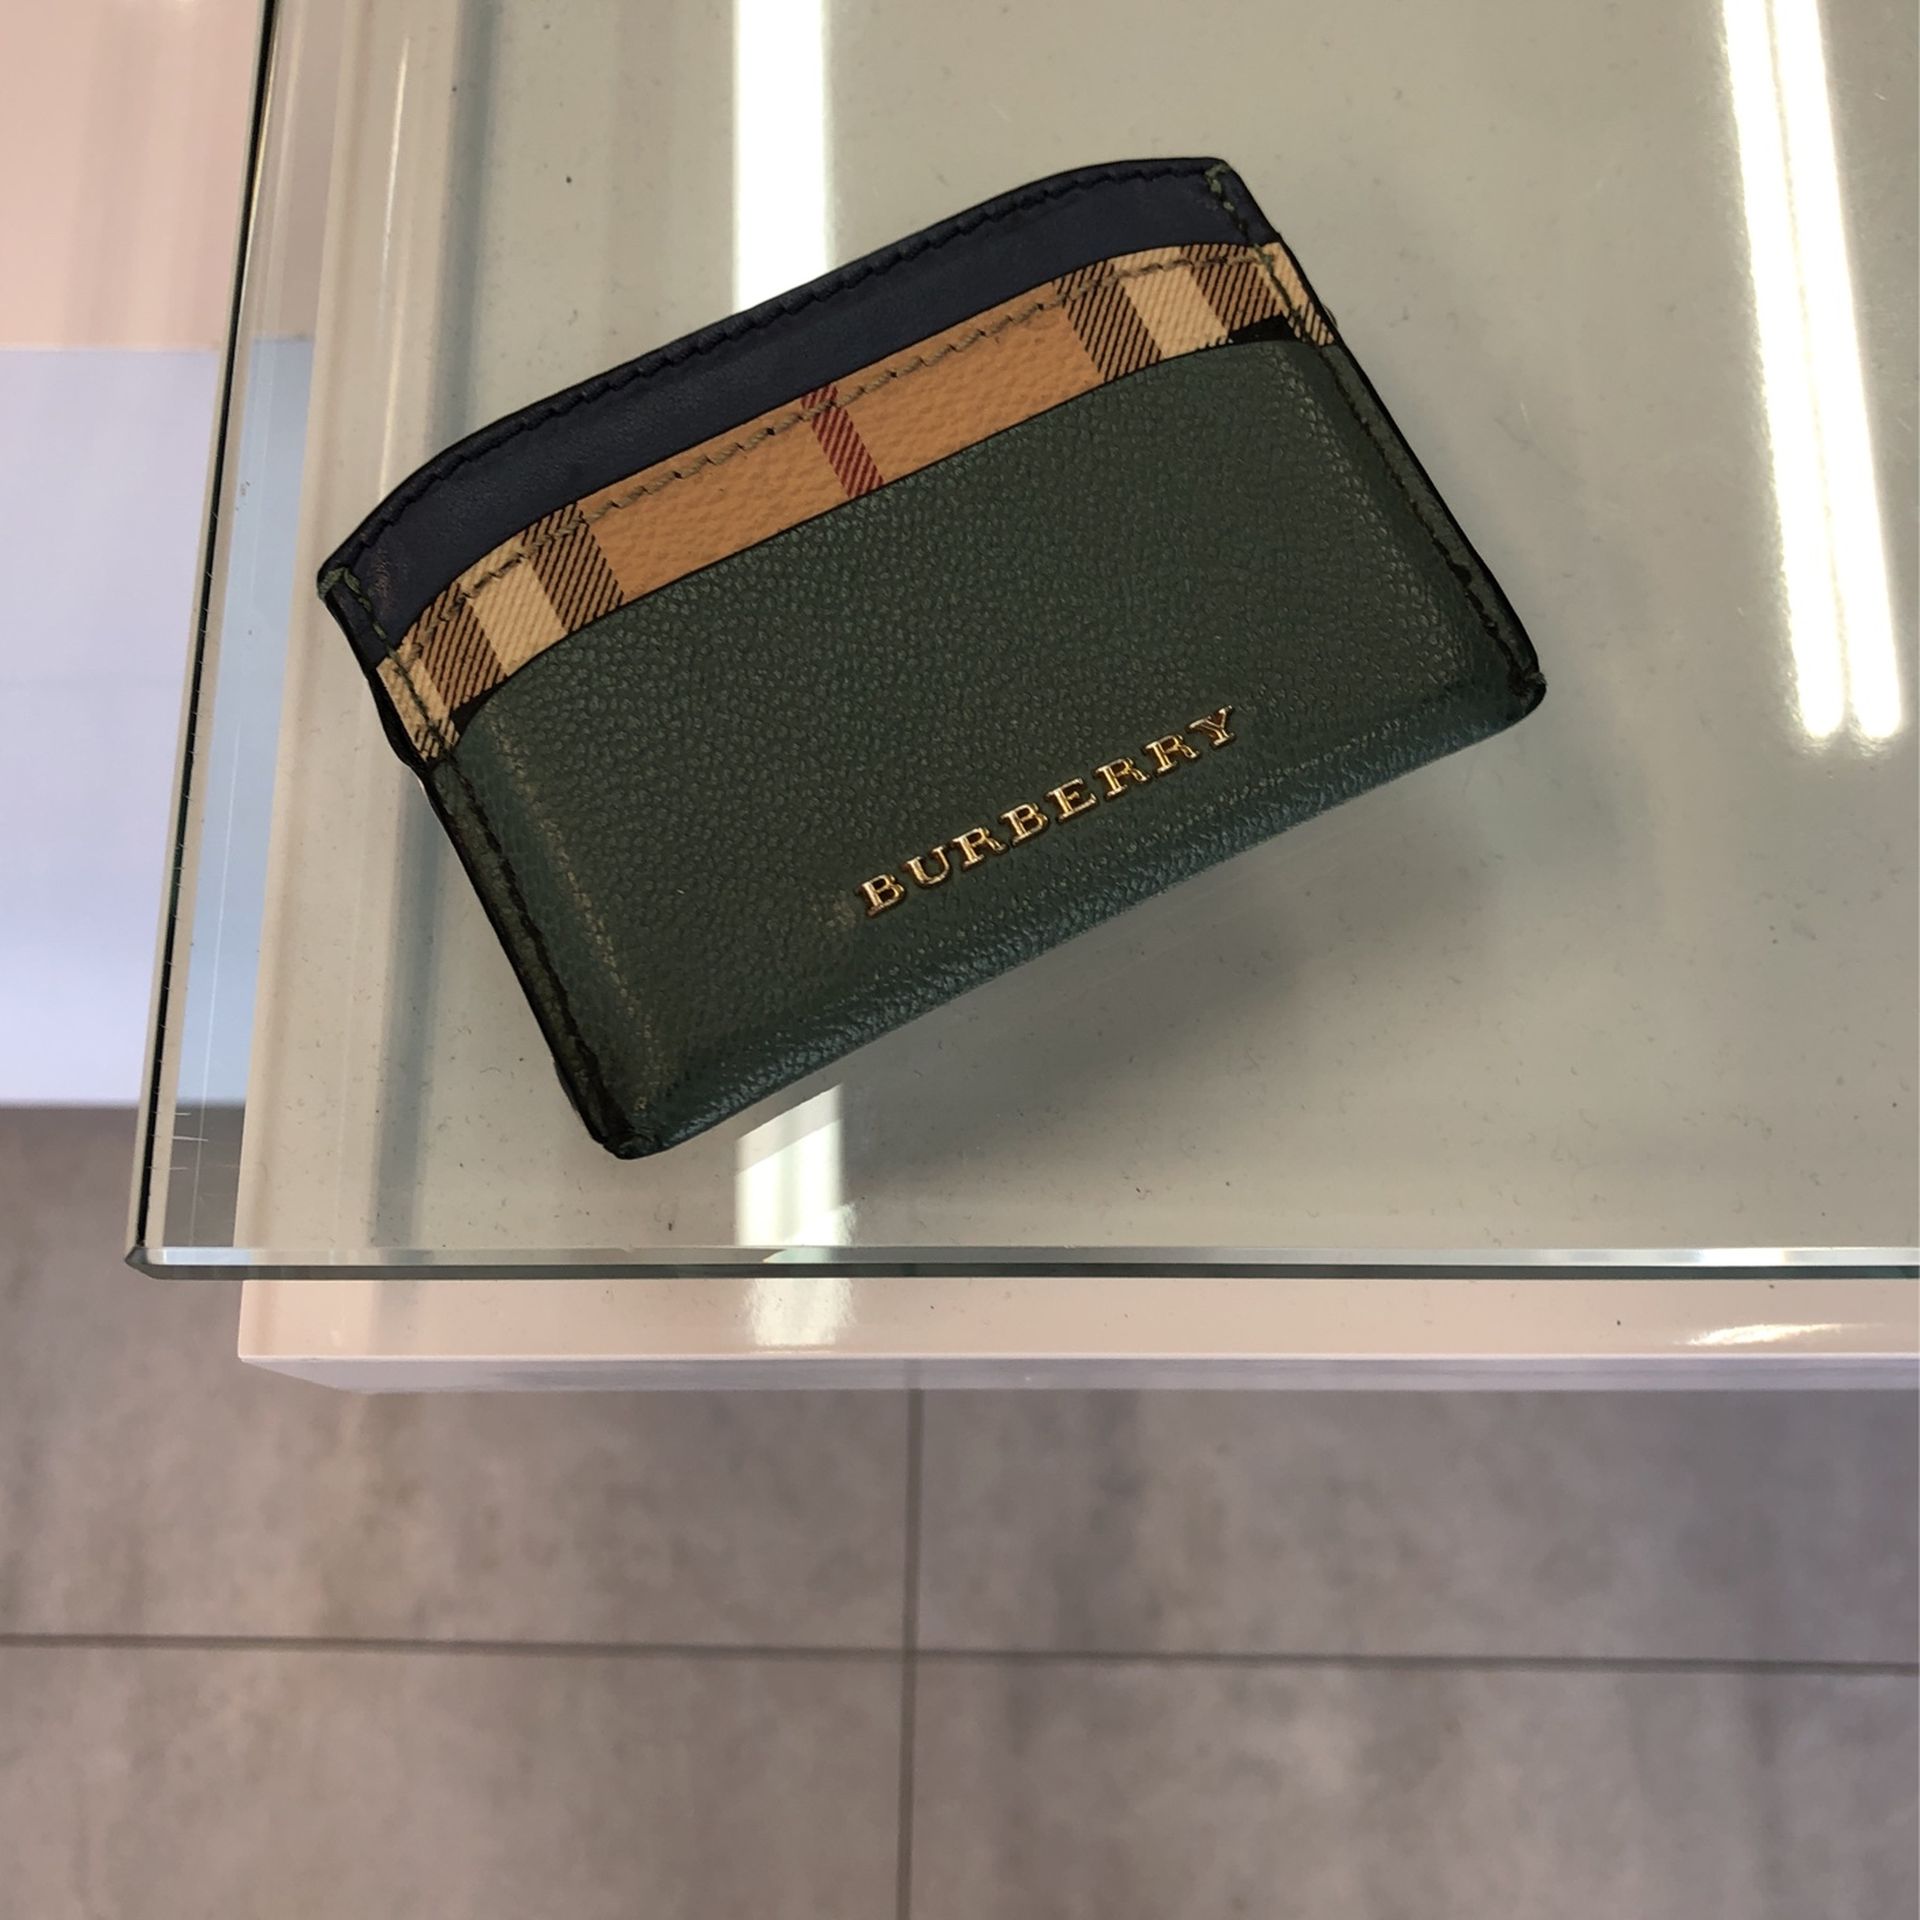 Burberry card holder